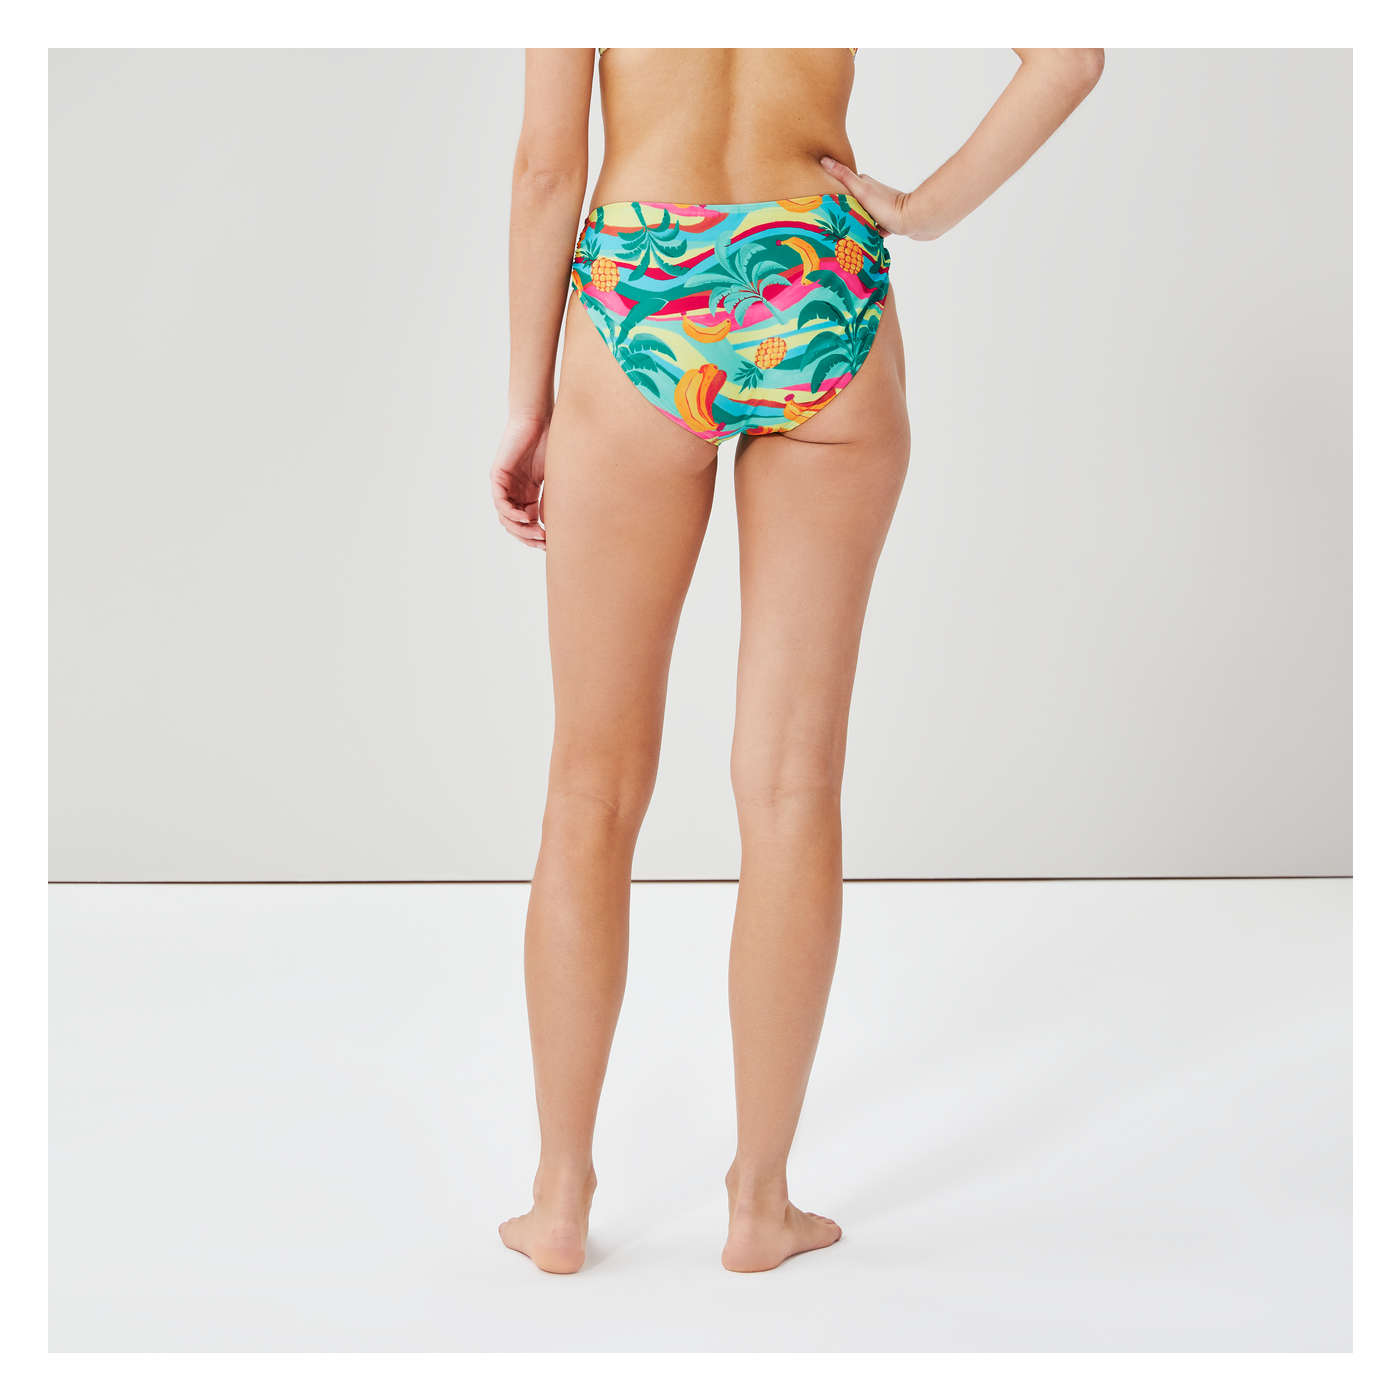 Low Rise Full-Coverage Bikini Bottom in Bright Aqua from Joe Fresh